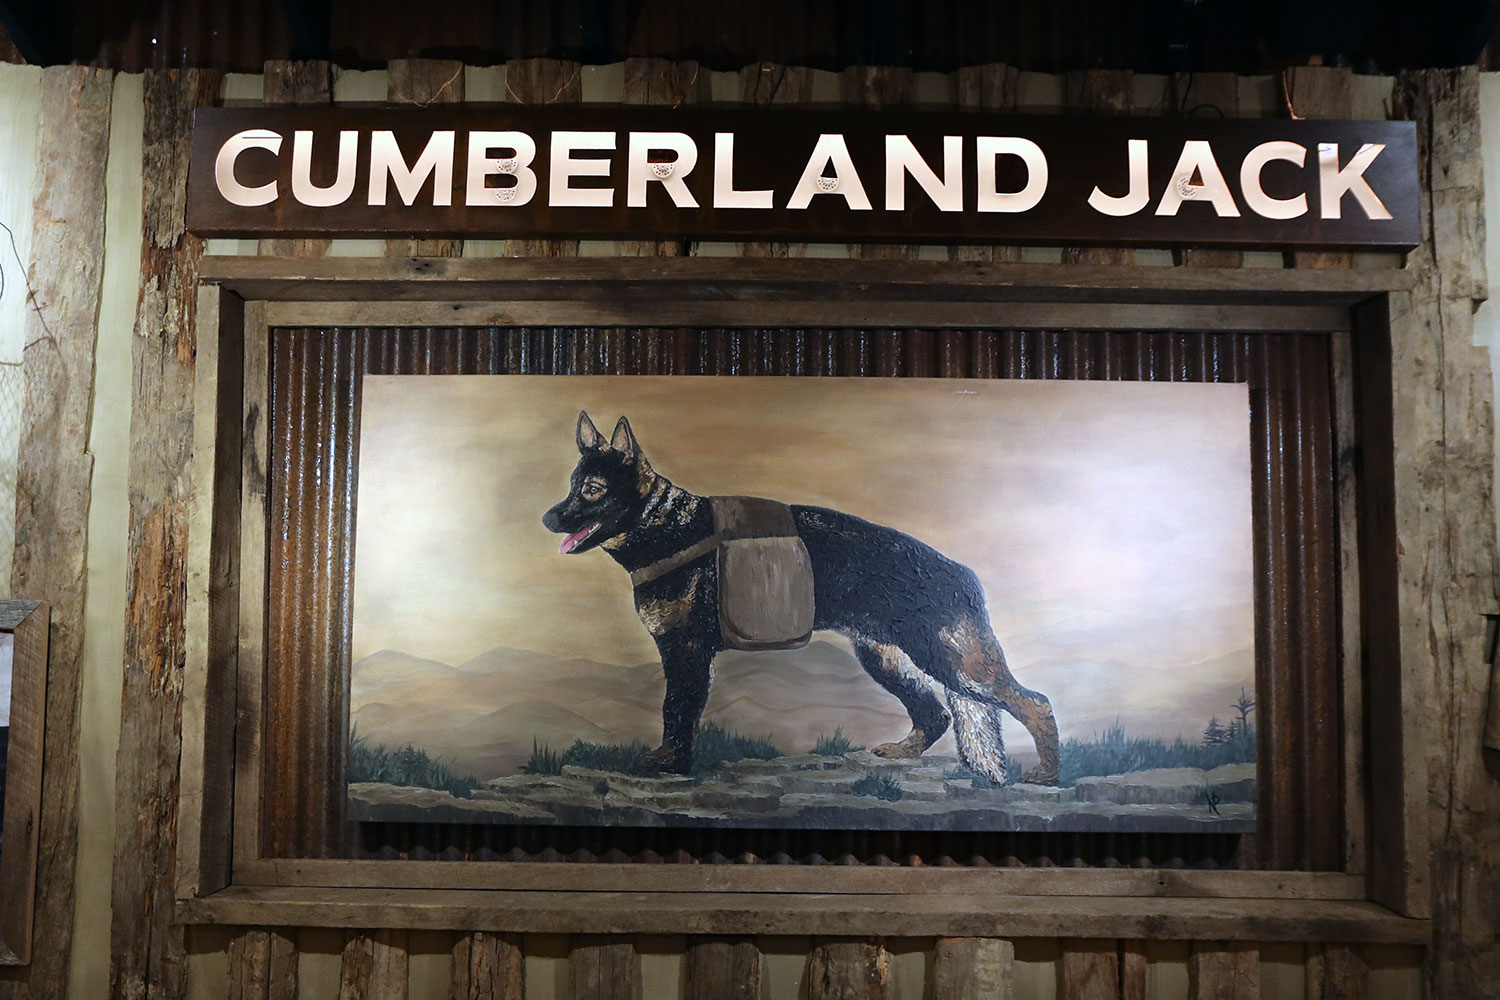 Cumberland Jack's